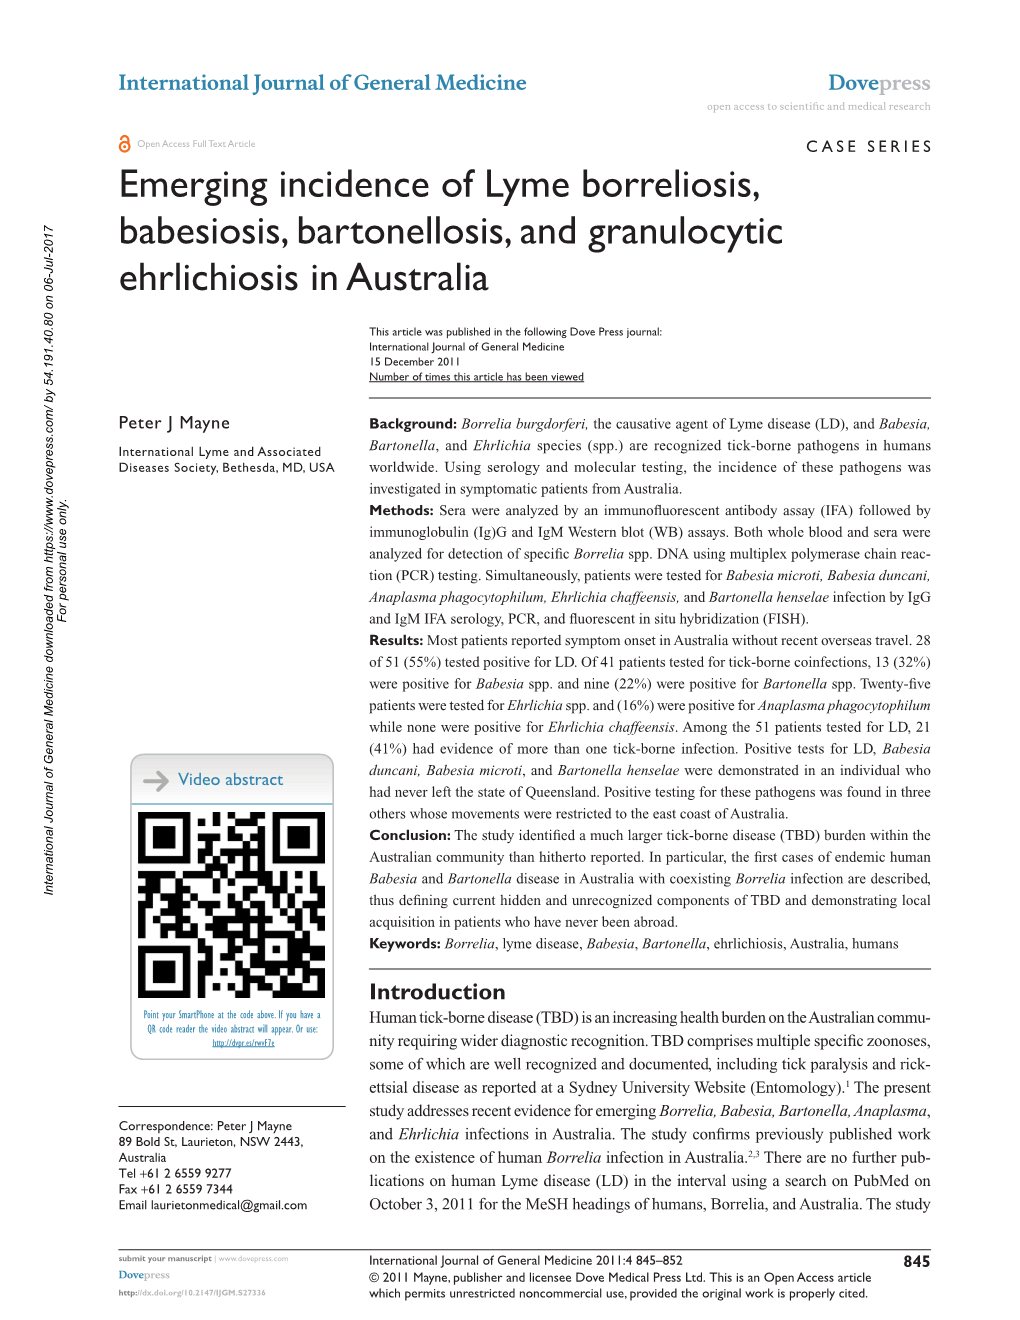 Emerging Incidence of Lyme Borreliosis, Babesiosis, Bartonellosis, and Granulocytic Ehrlichiosis in Australia